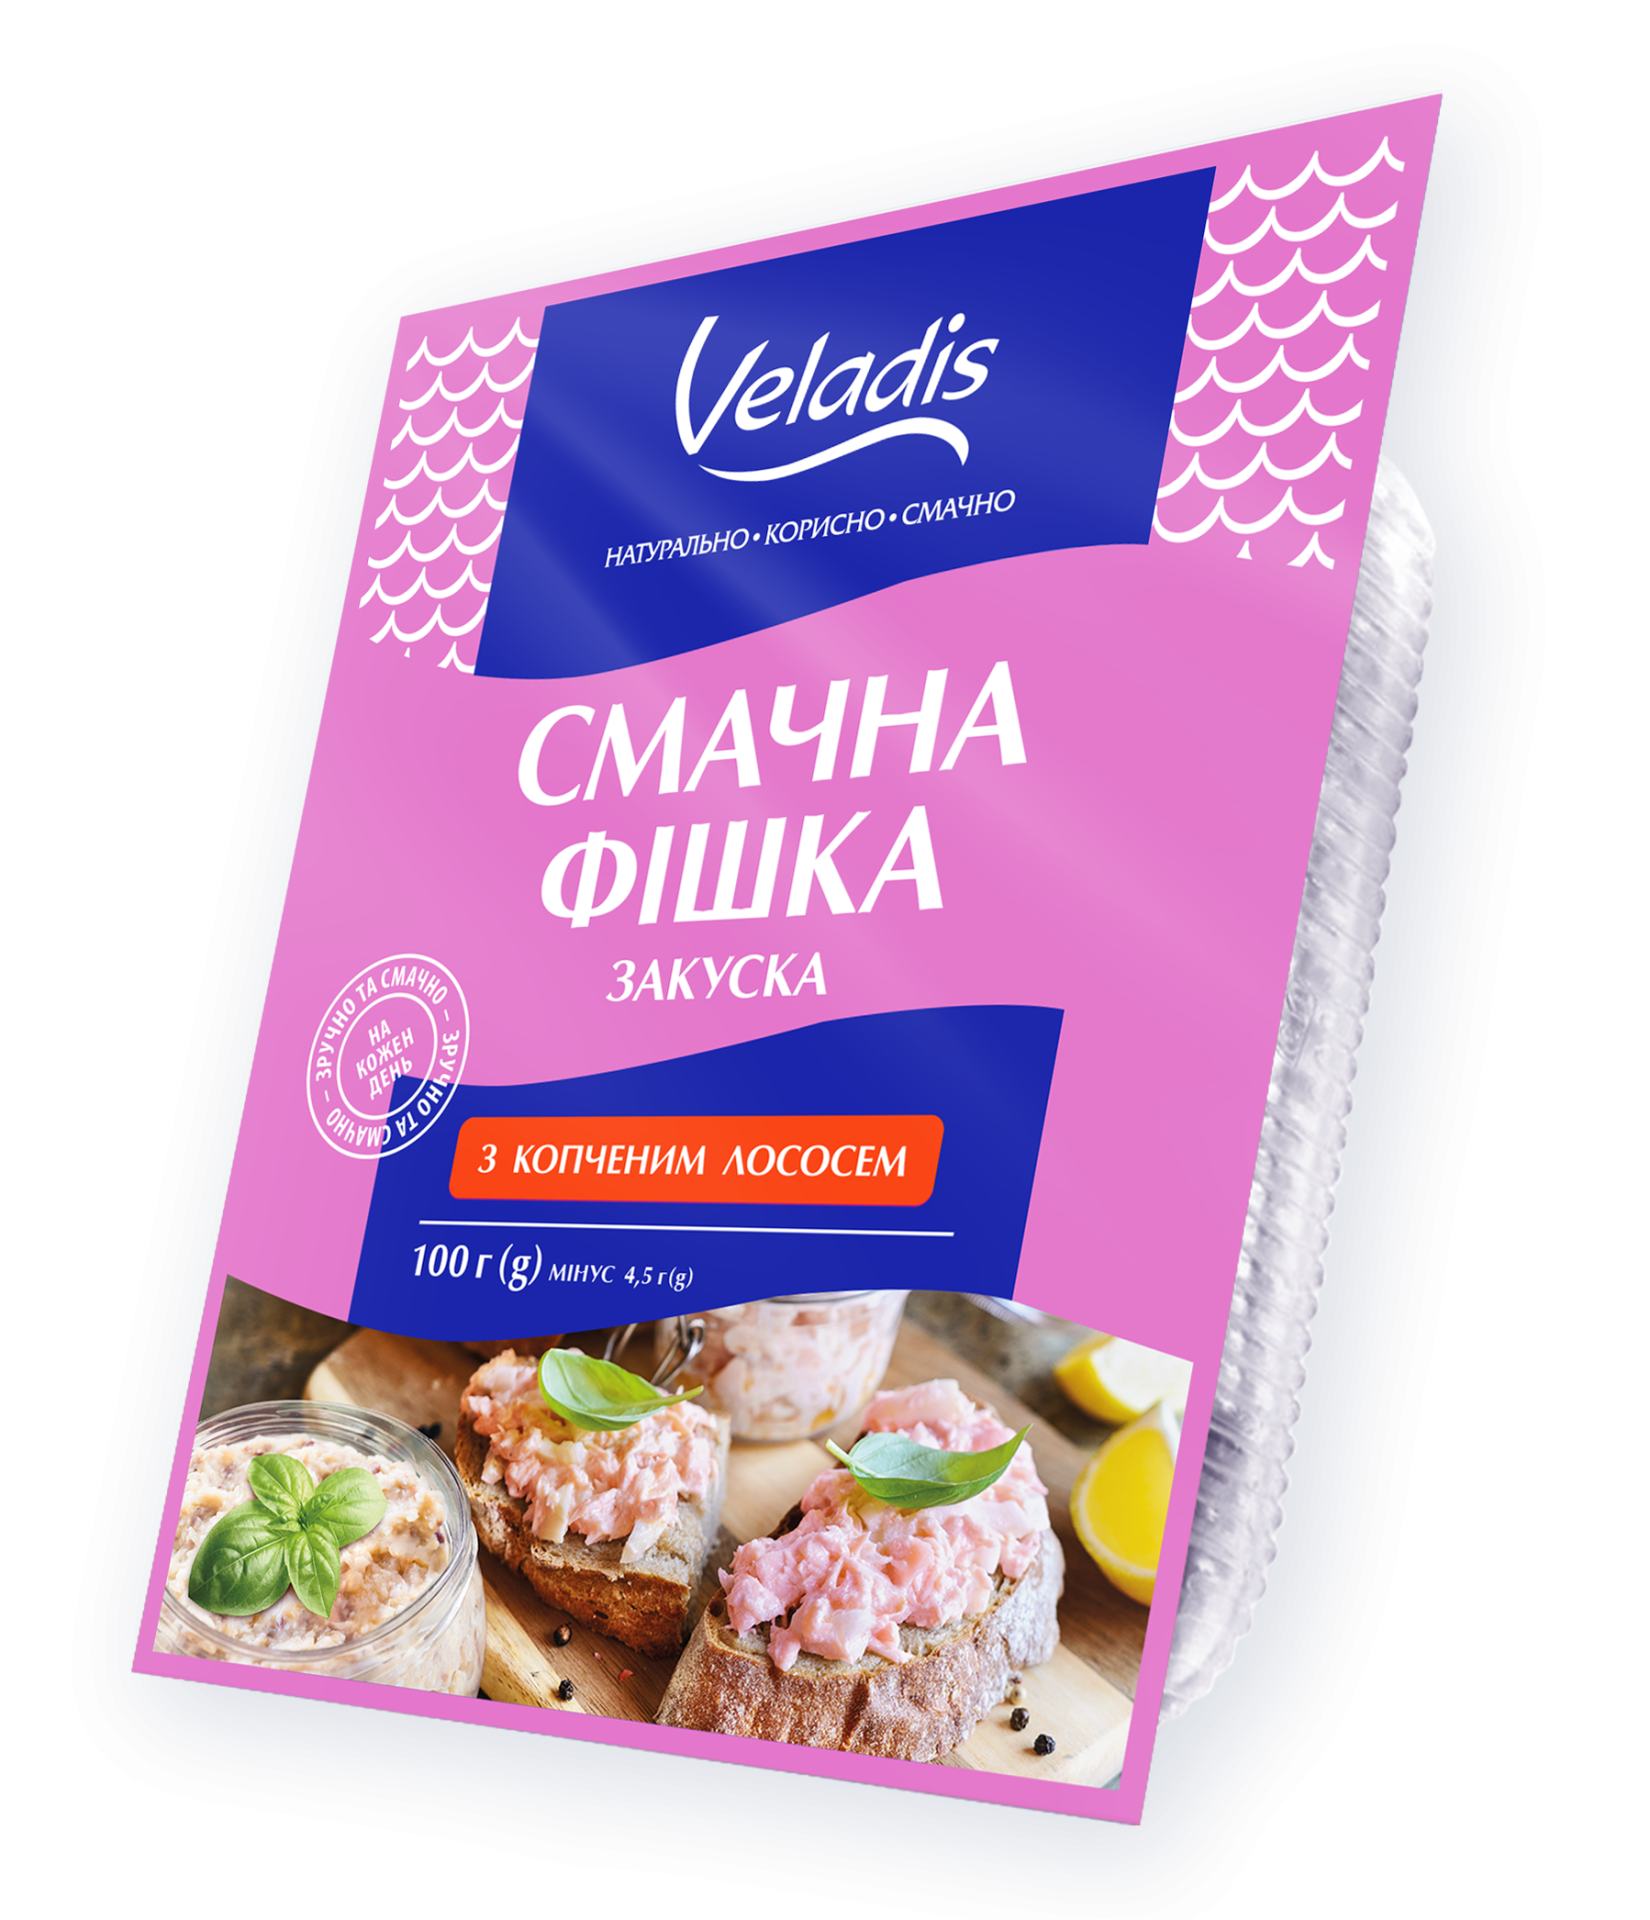 Fish appetizer "Smachna fishka" with smoked salmon